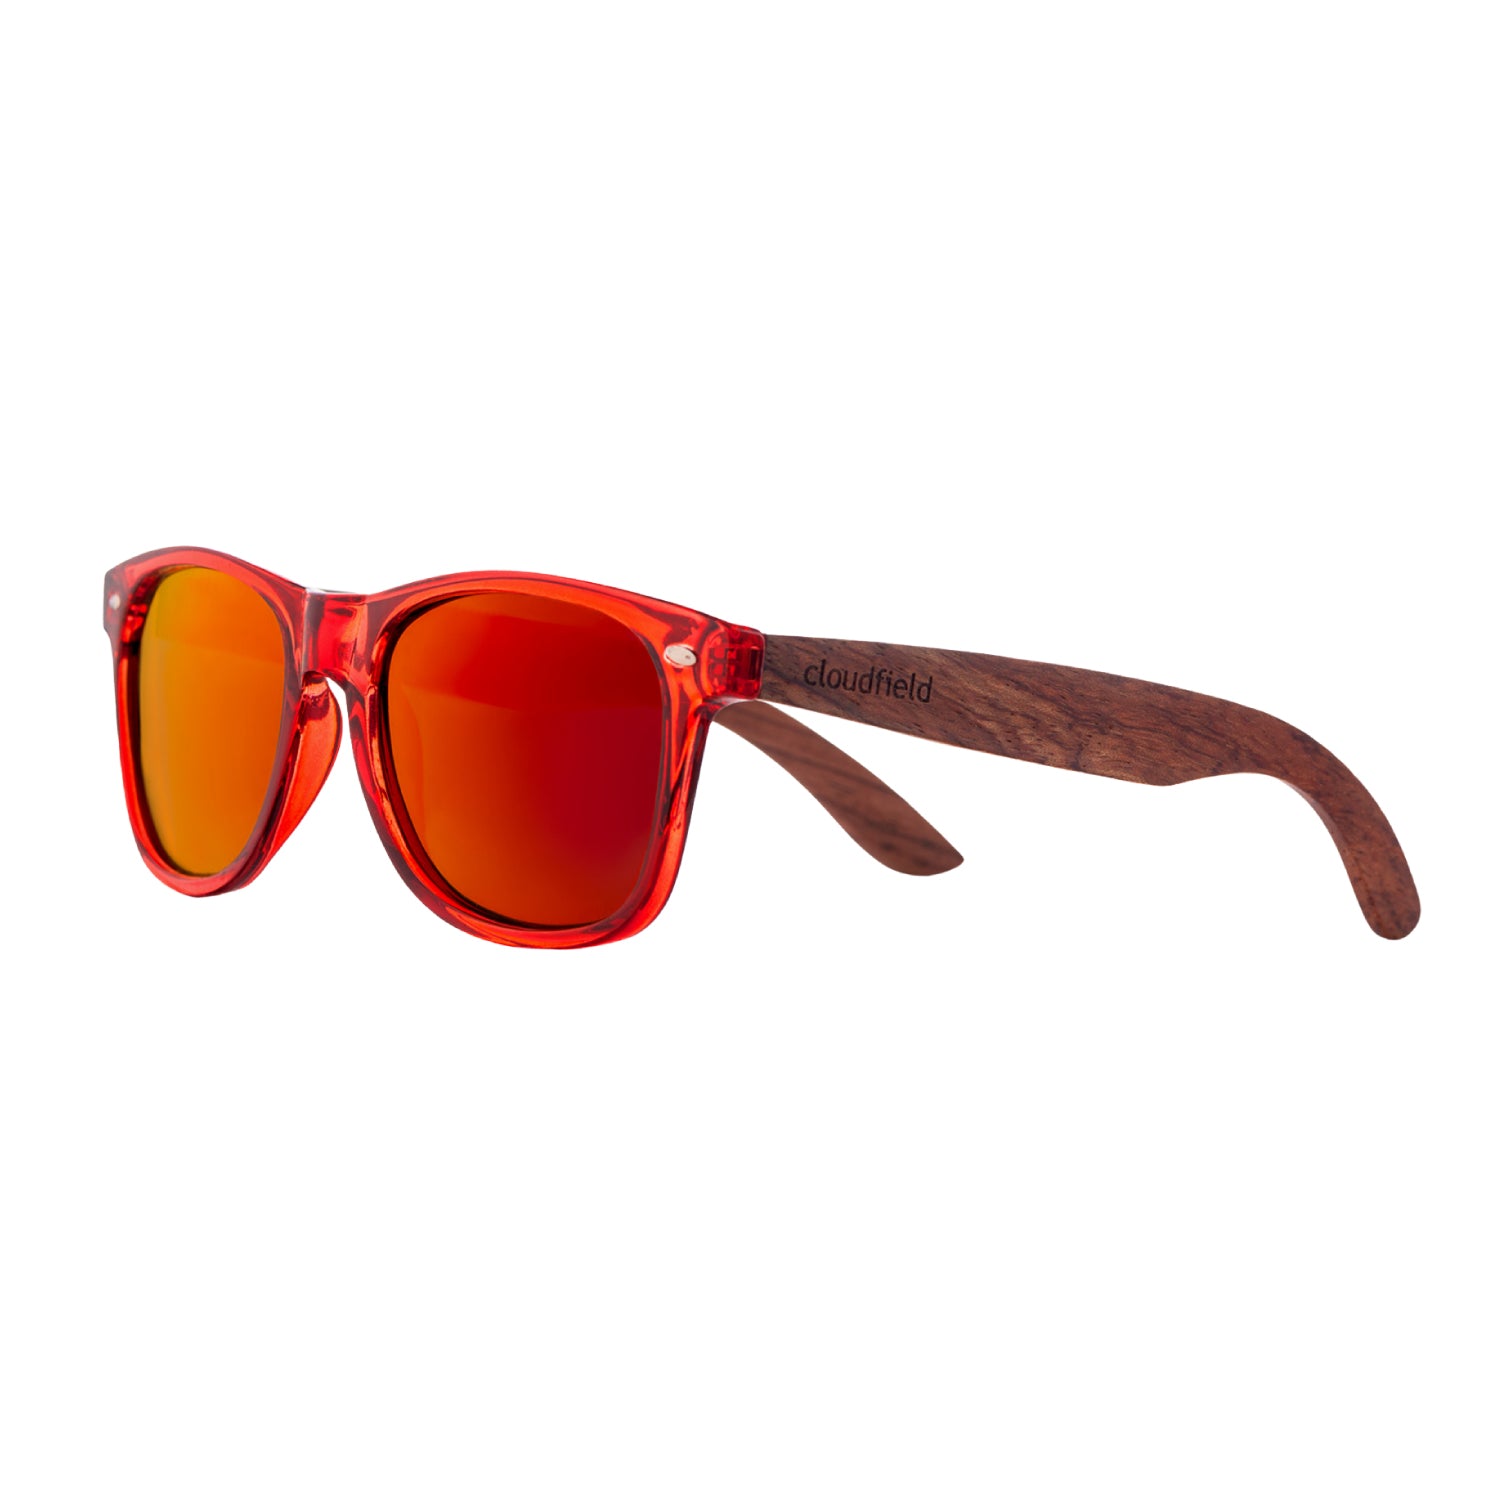 red polarized sunglasses